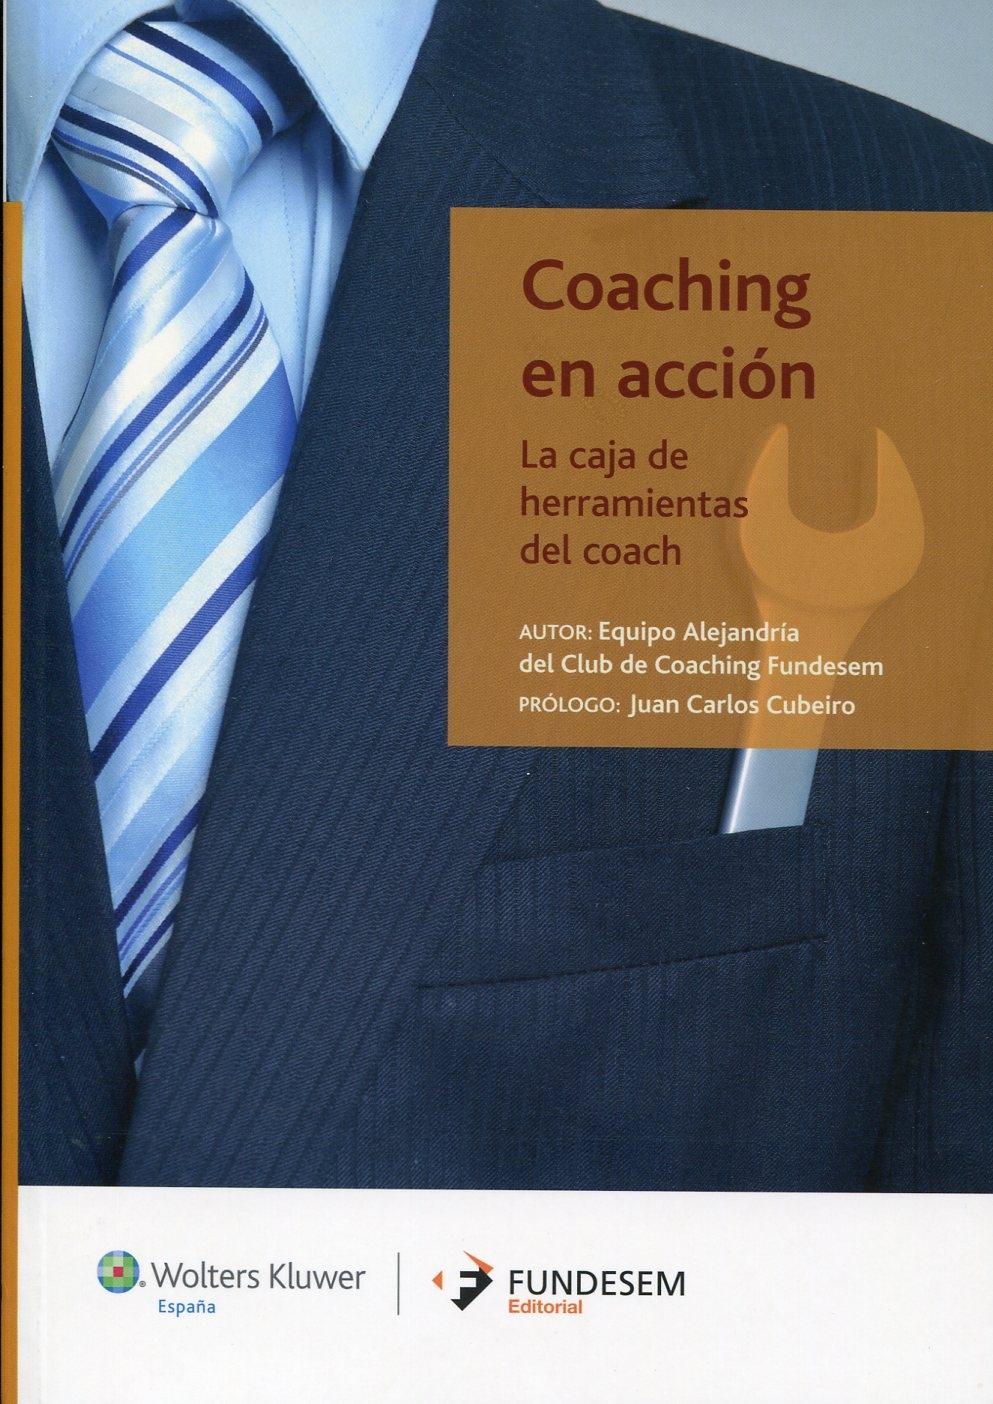 Coaching en accion